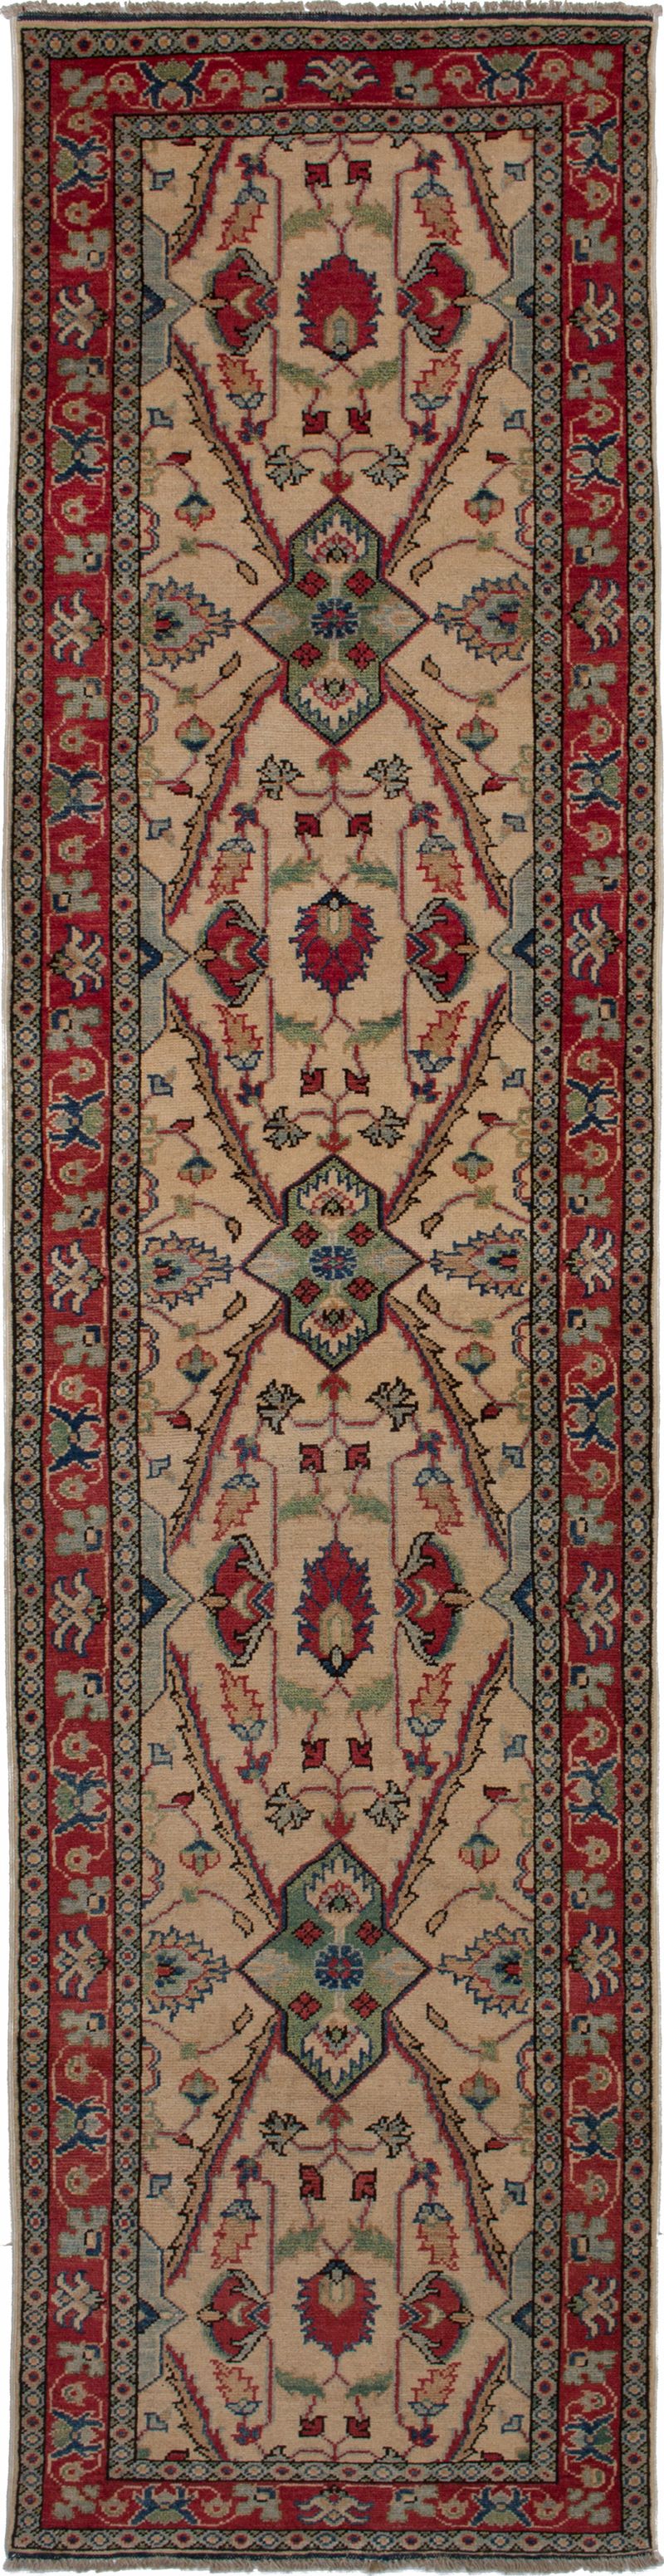 Hand-knotted Finest Gazni Beige Wool Rug 2'6" x 10'2" Size: 2'6" x 10'2"  